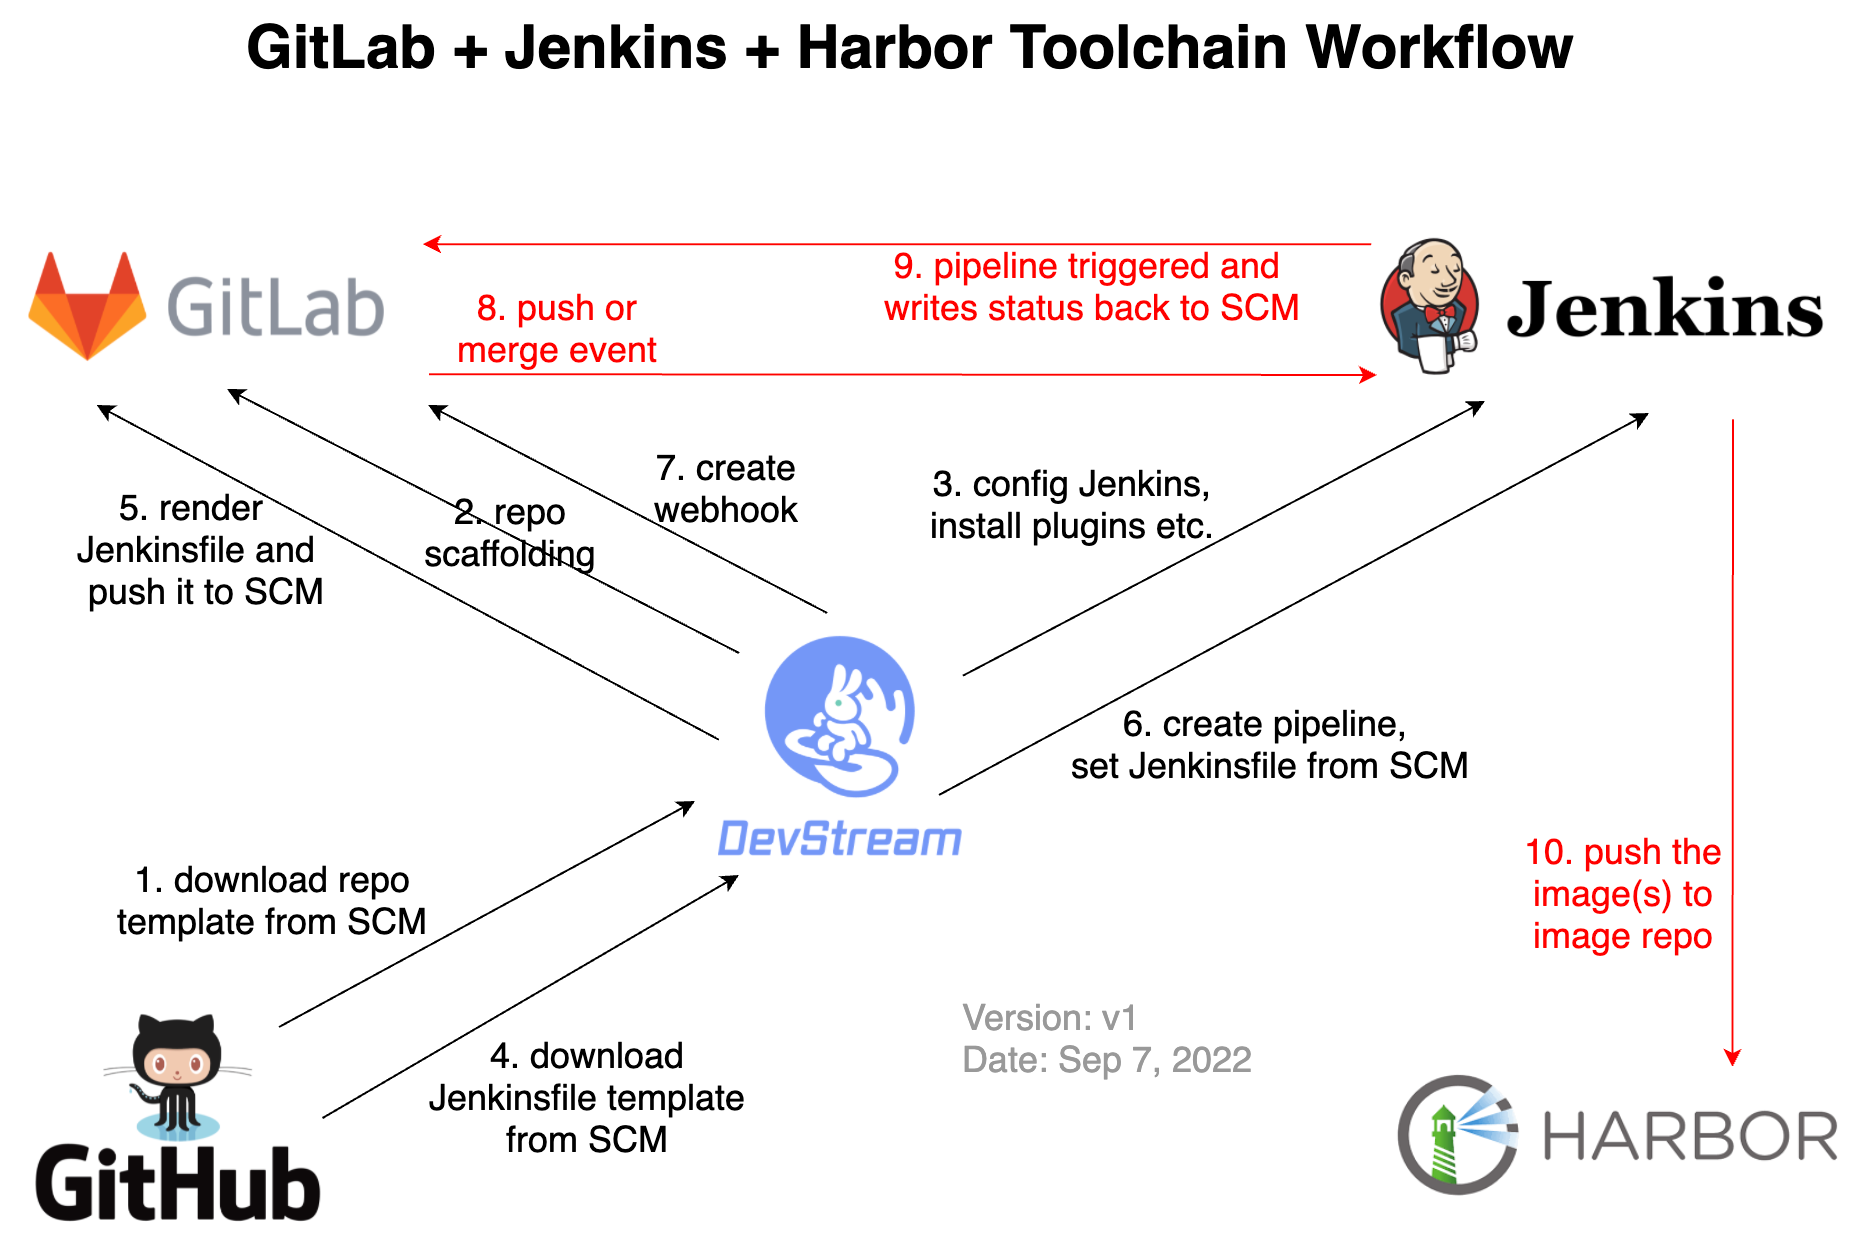 GitLab+Jenkins+Harbor with DevStream